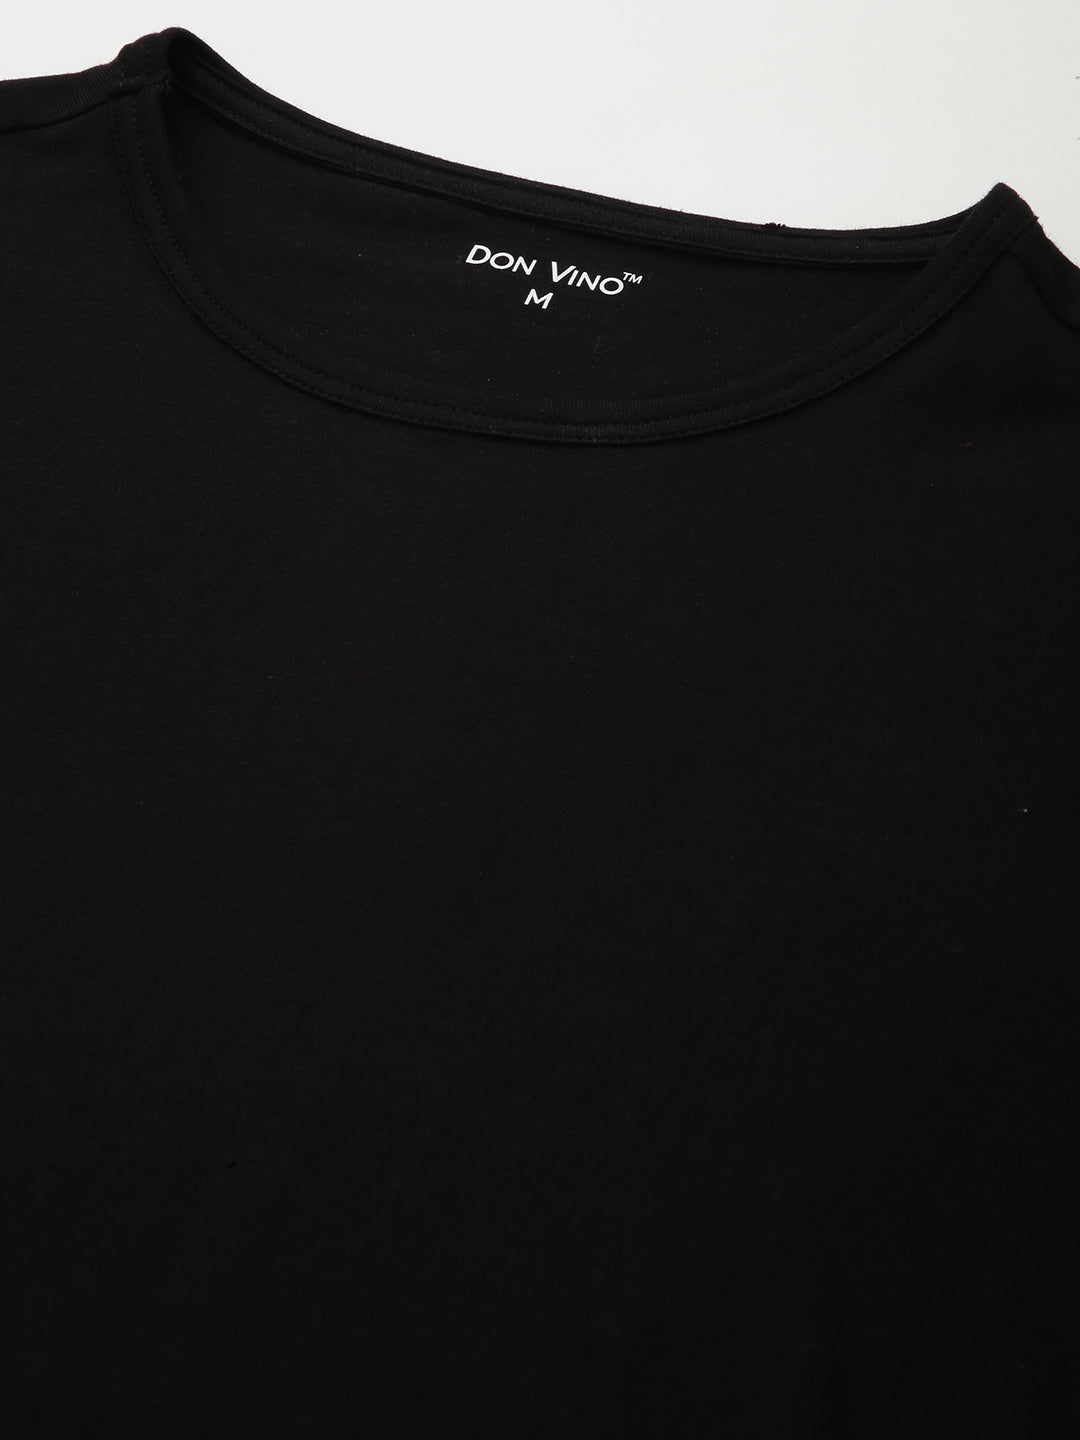 Don Vino Men's Black Solid Crew Neck T-Shirt